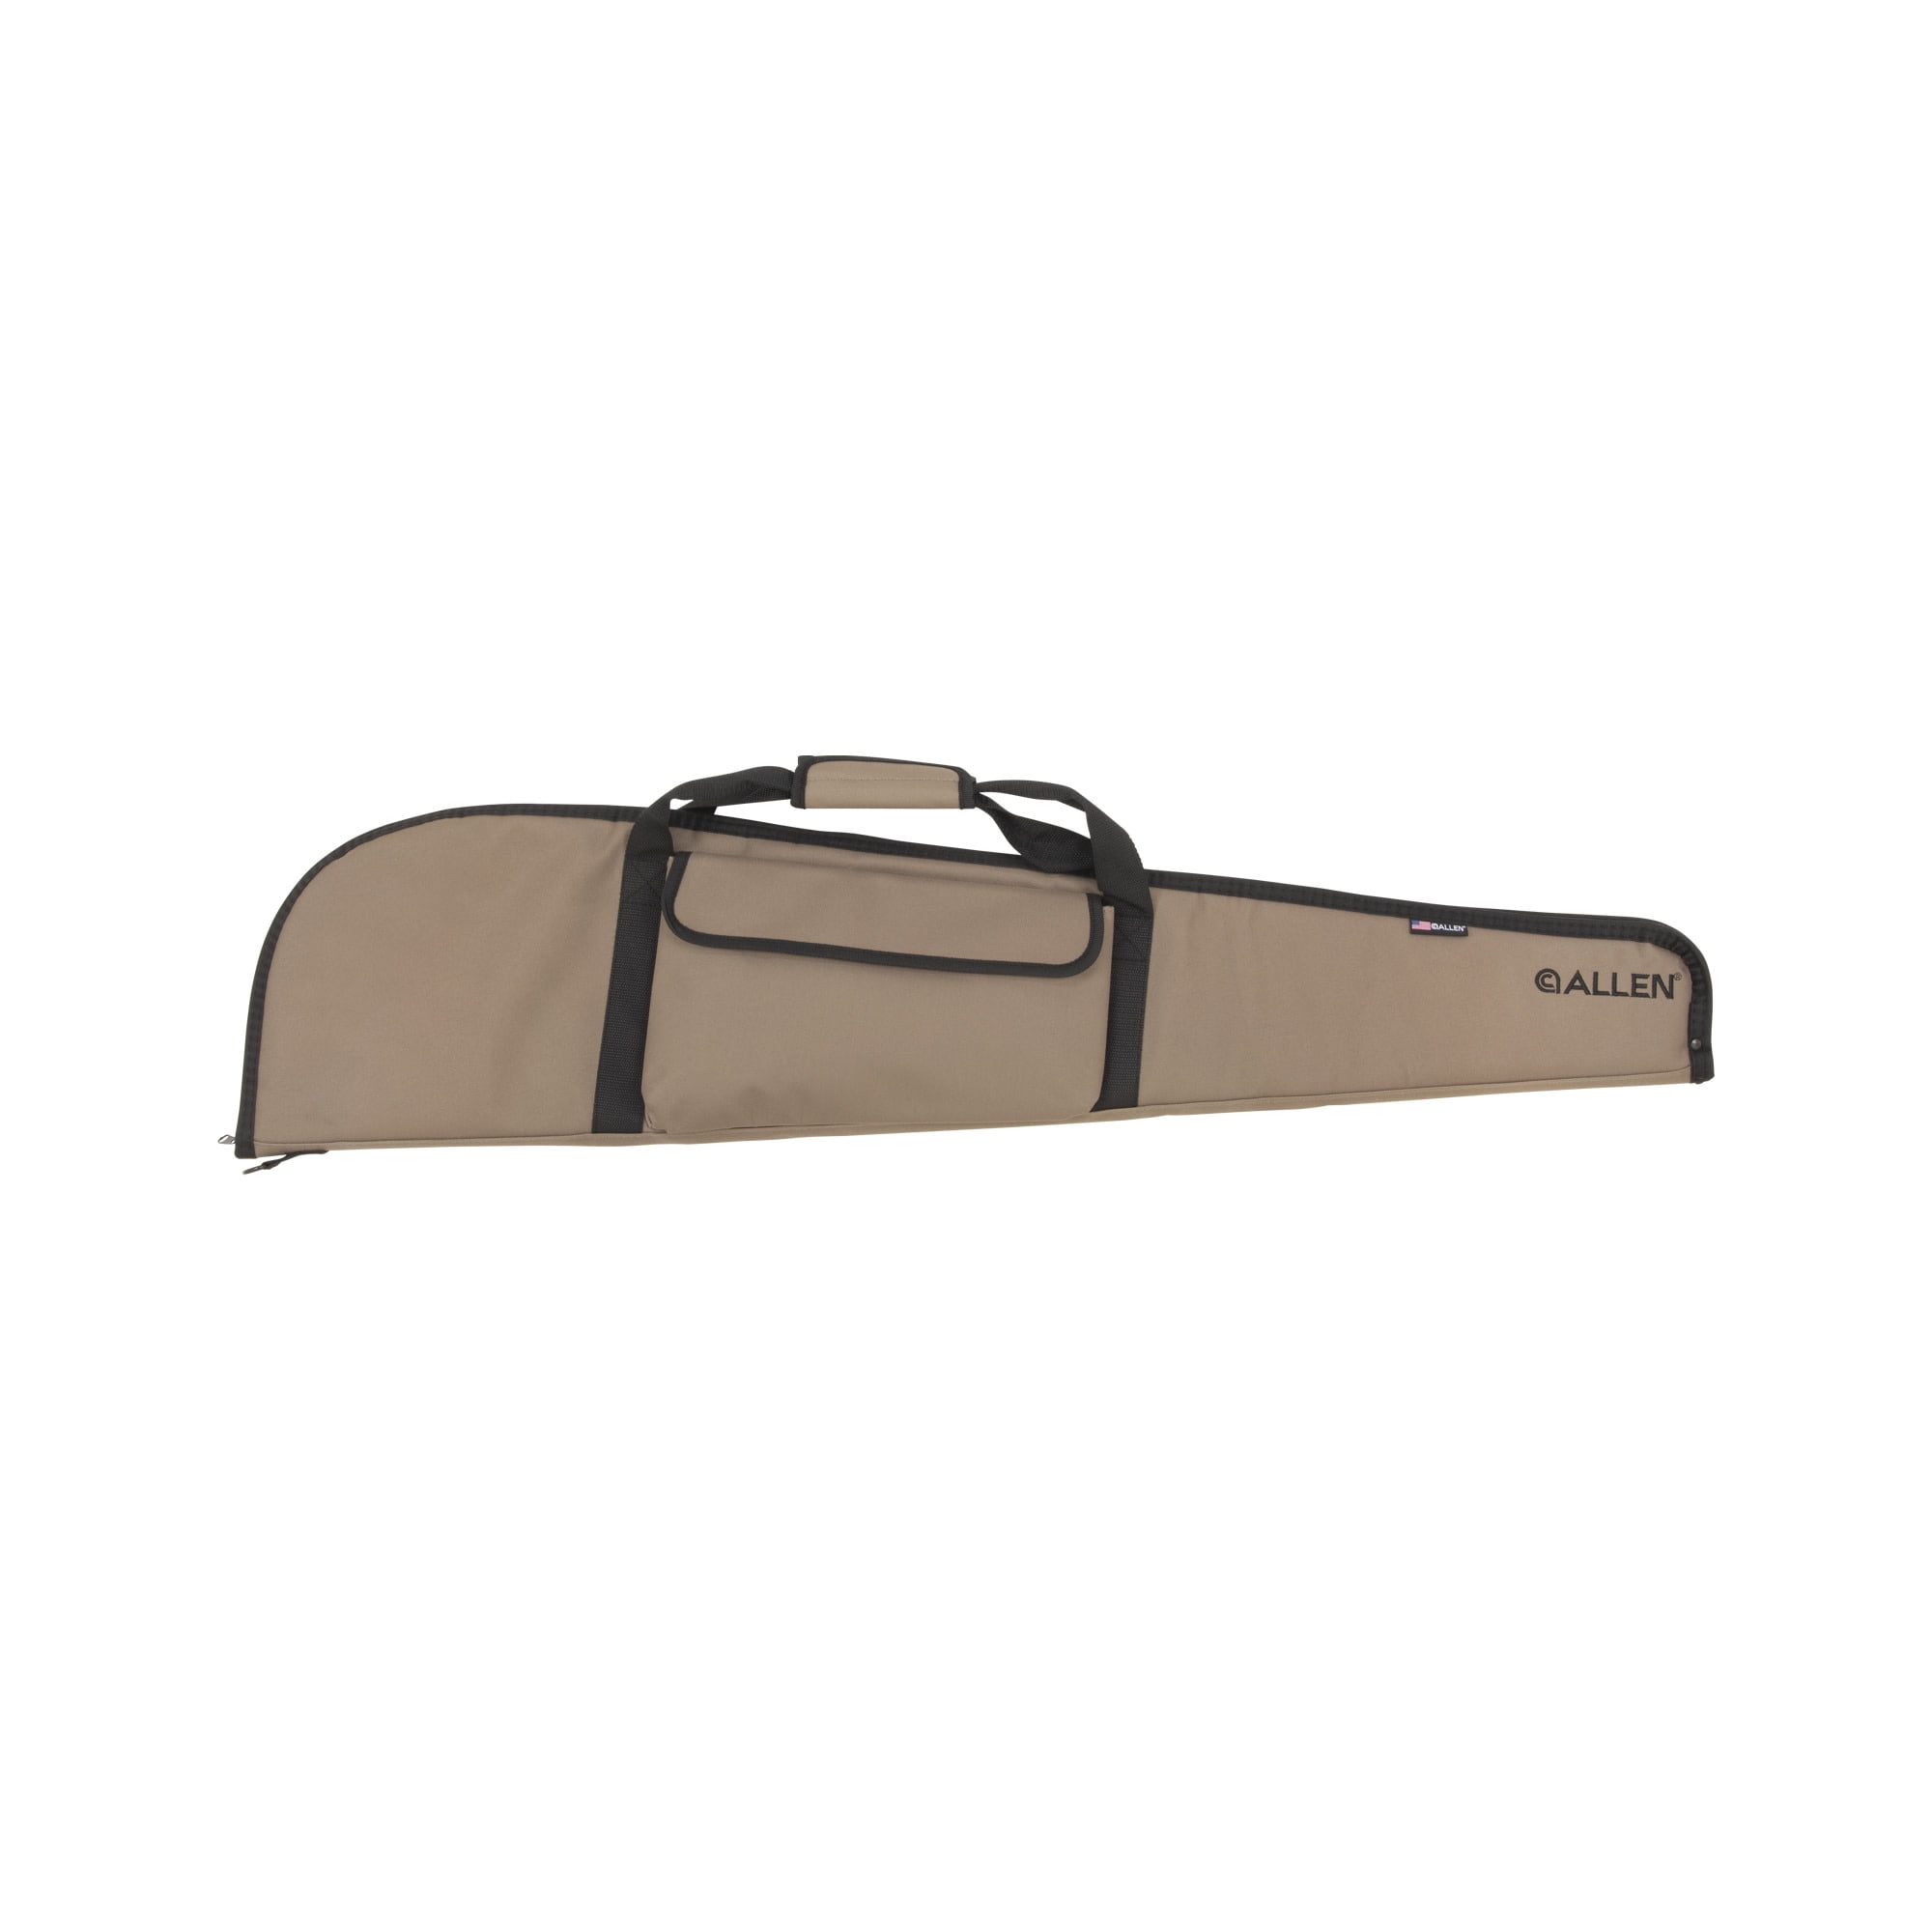 48 inch Rifle Case Tactical Black Scoped Soft Padded ShotGun Bag Gun Storage 